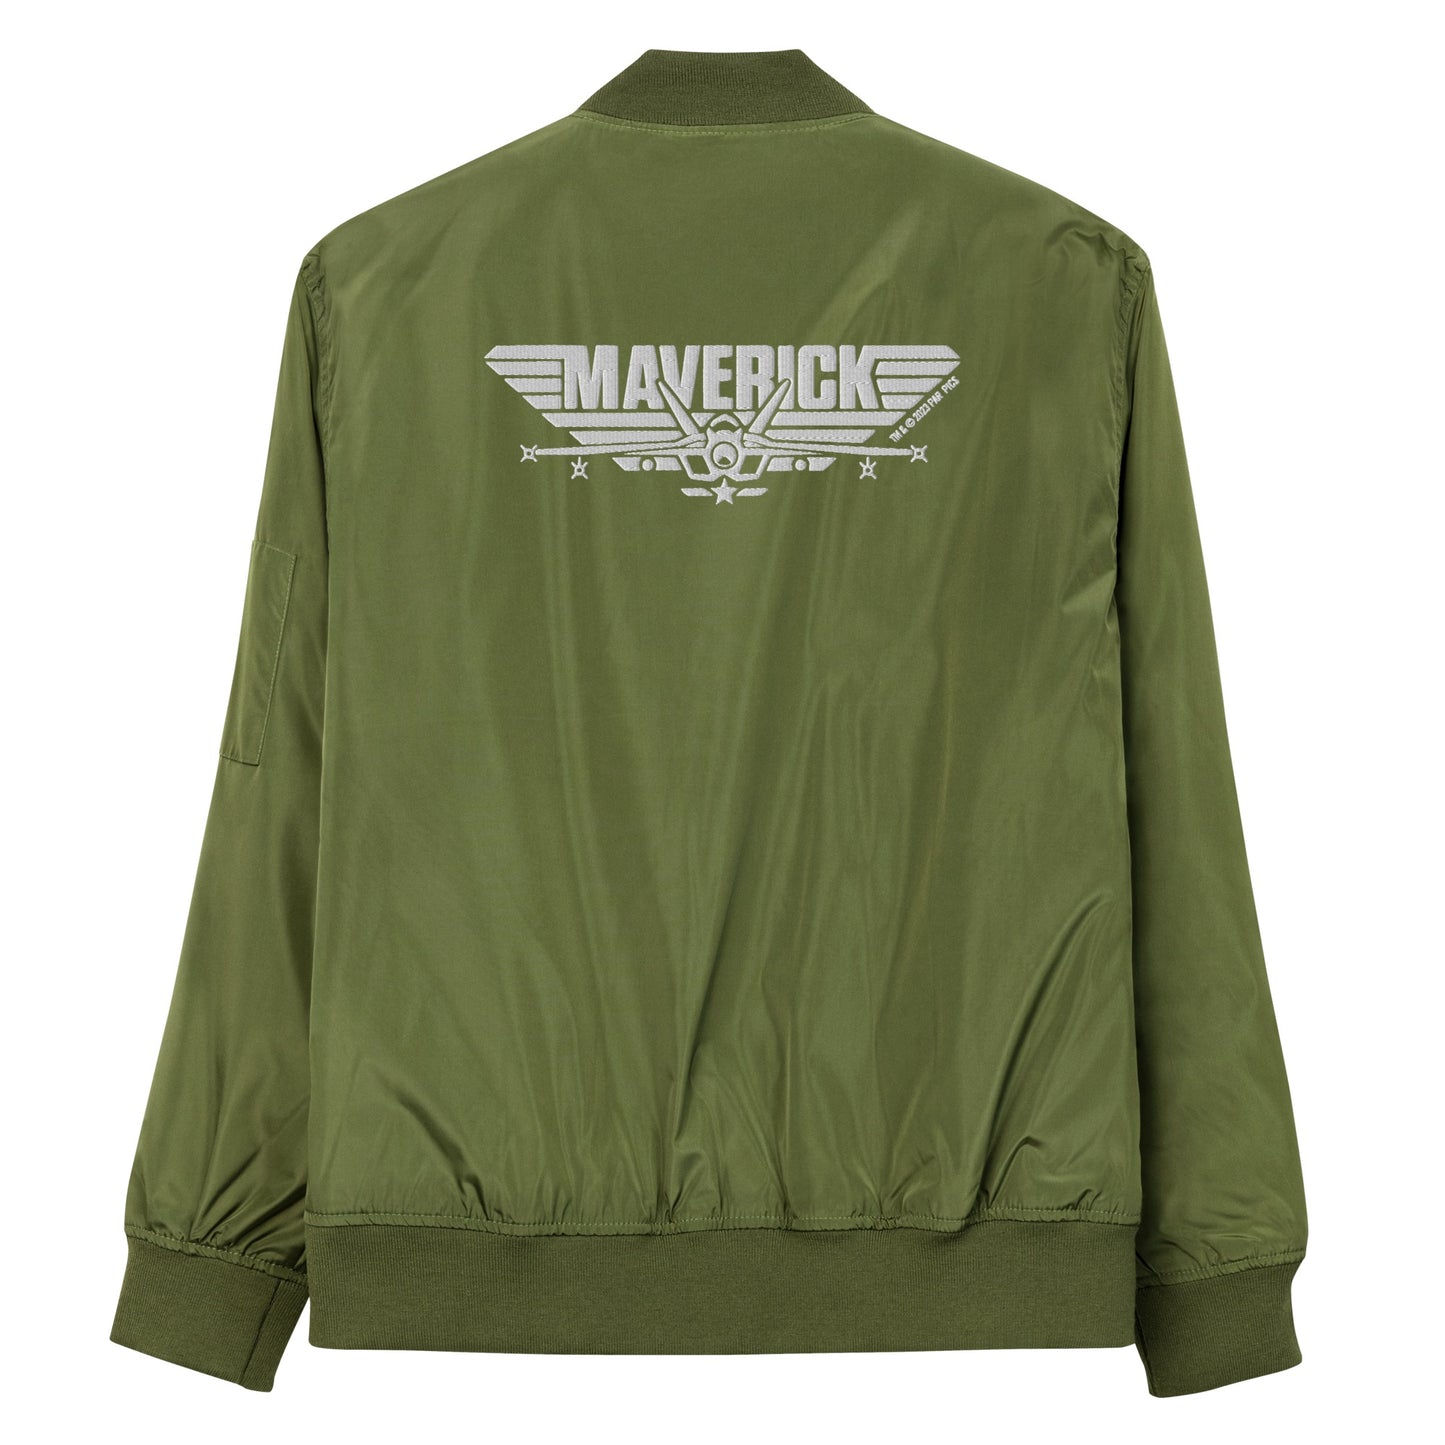 Top Gun: Maverick Embroidered Bomber Jacket